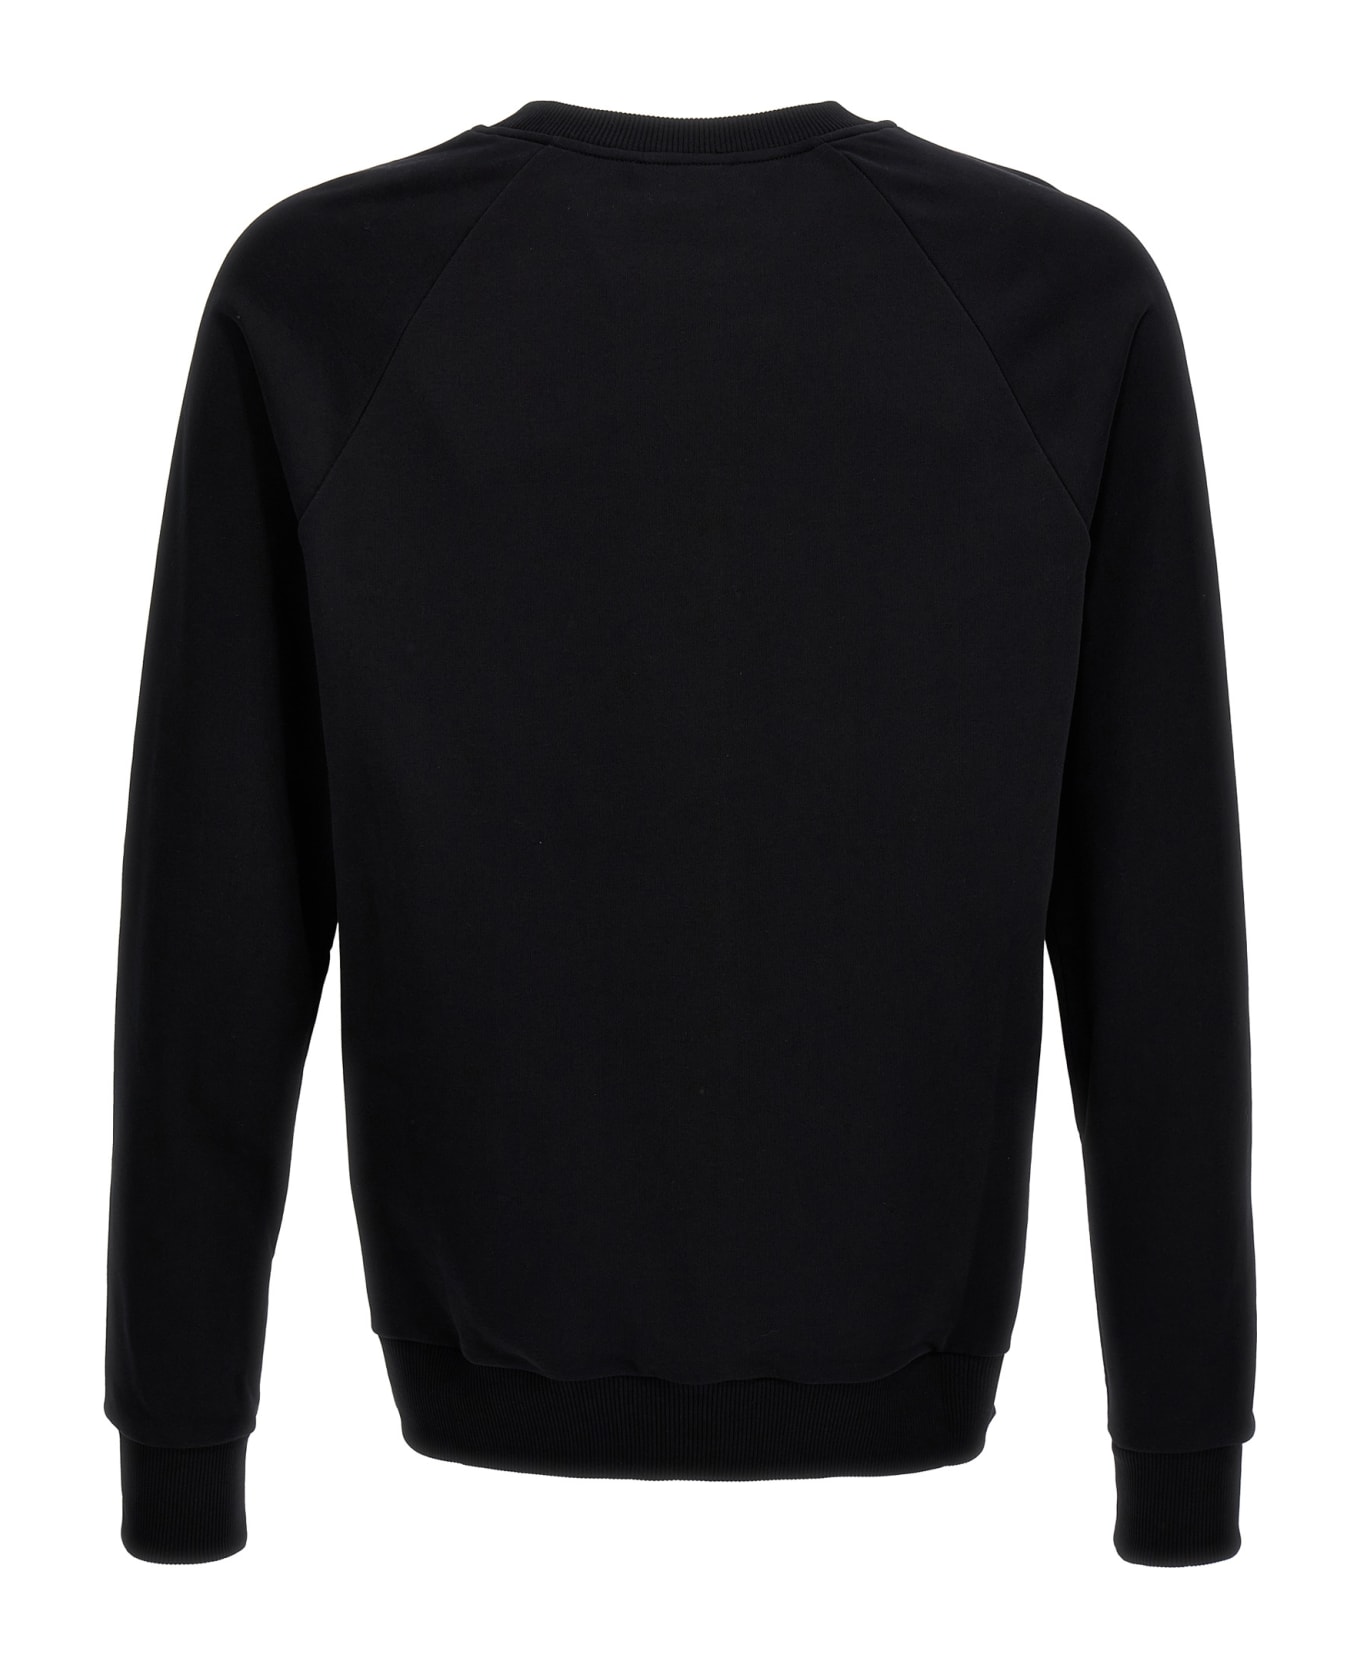 Balmain Flocked Logo Sweatshirt - Black フリース